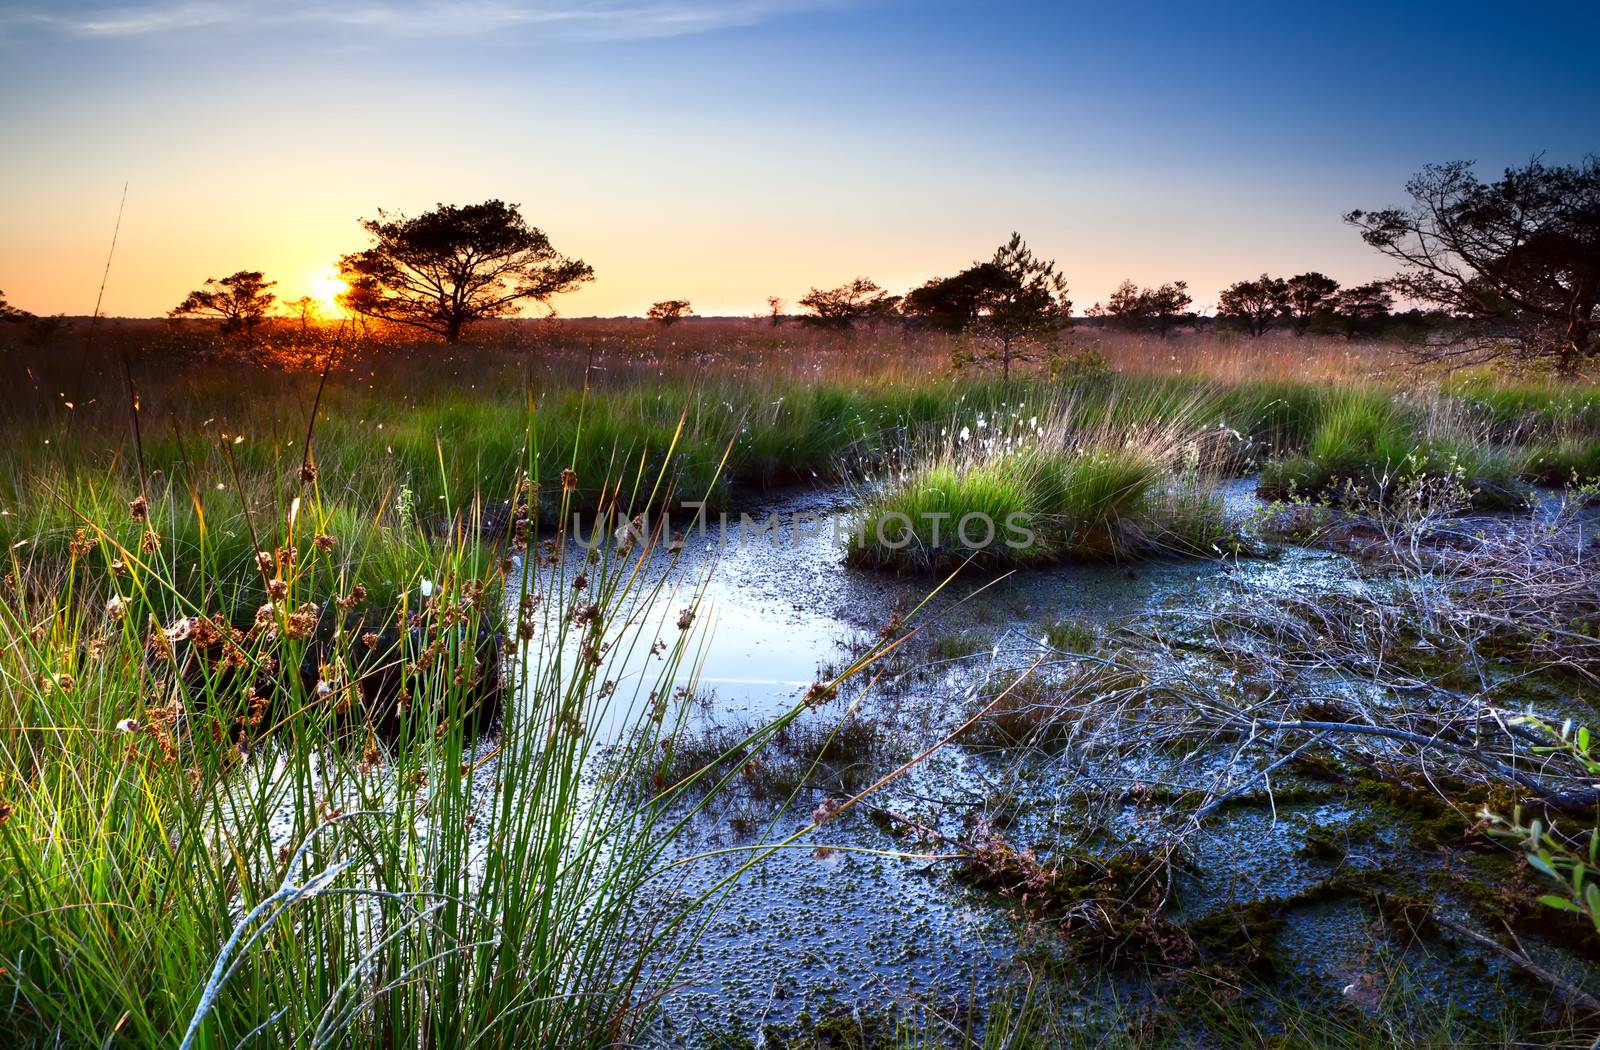 sunset over swamps in summer, Focheloerveen, Drenthe, Netherlands